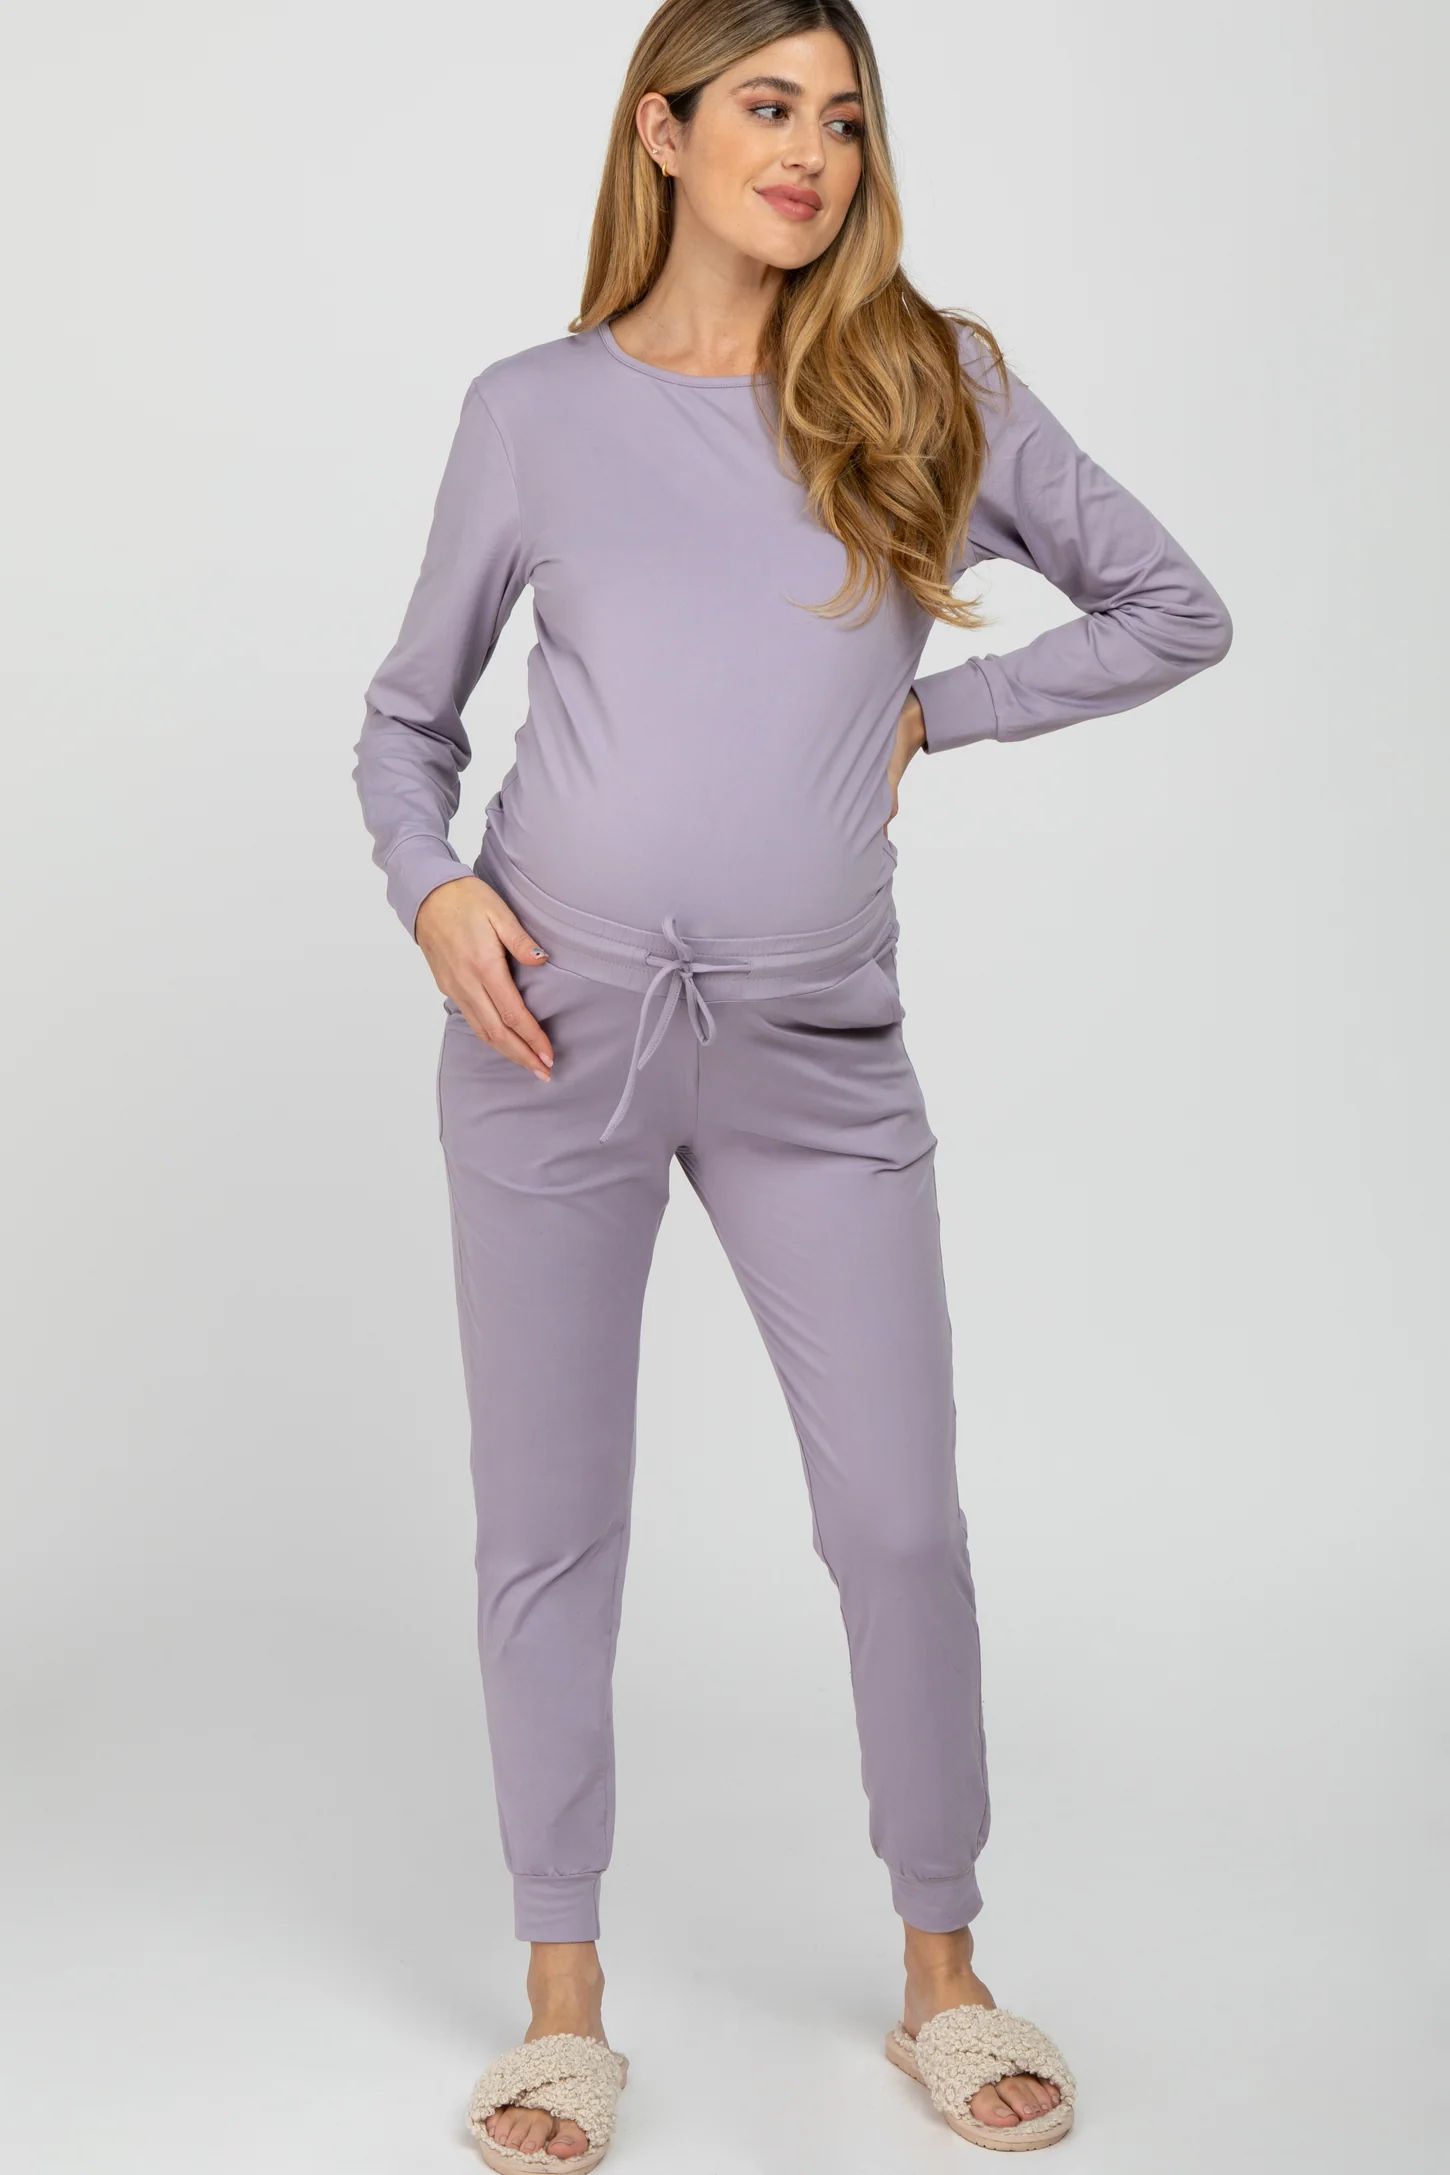 Lavender Soft Knit Jogger Maternity Lounge Set | PinkBlush Maternity